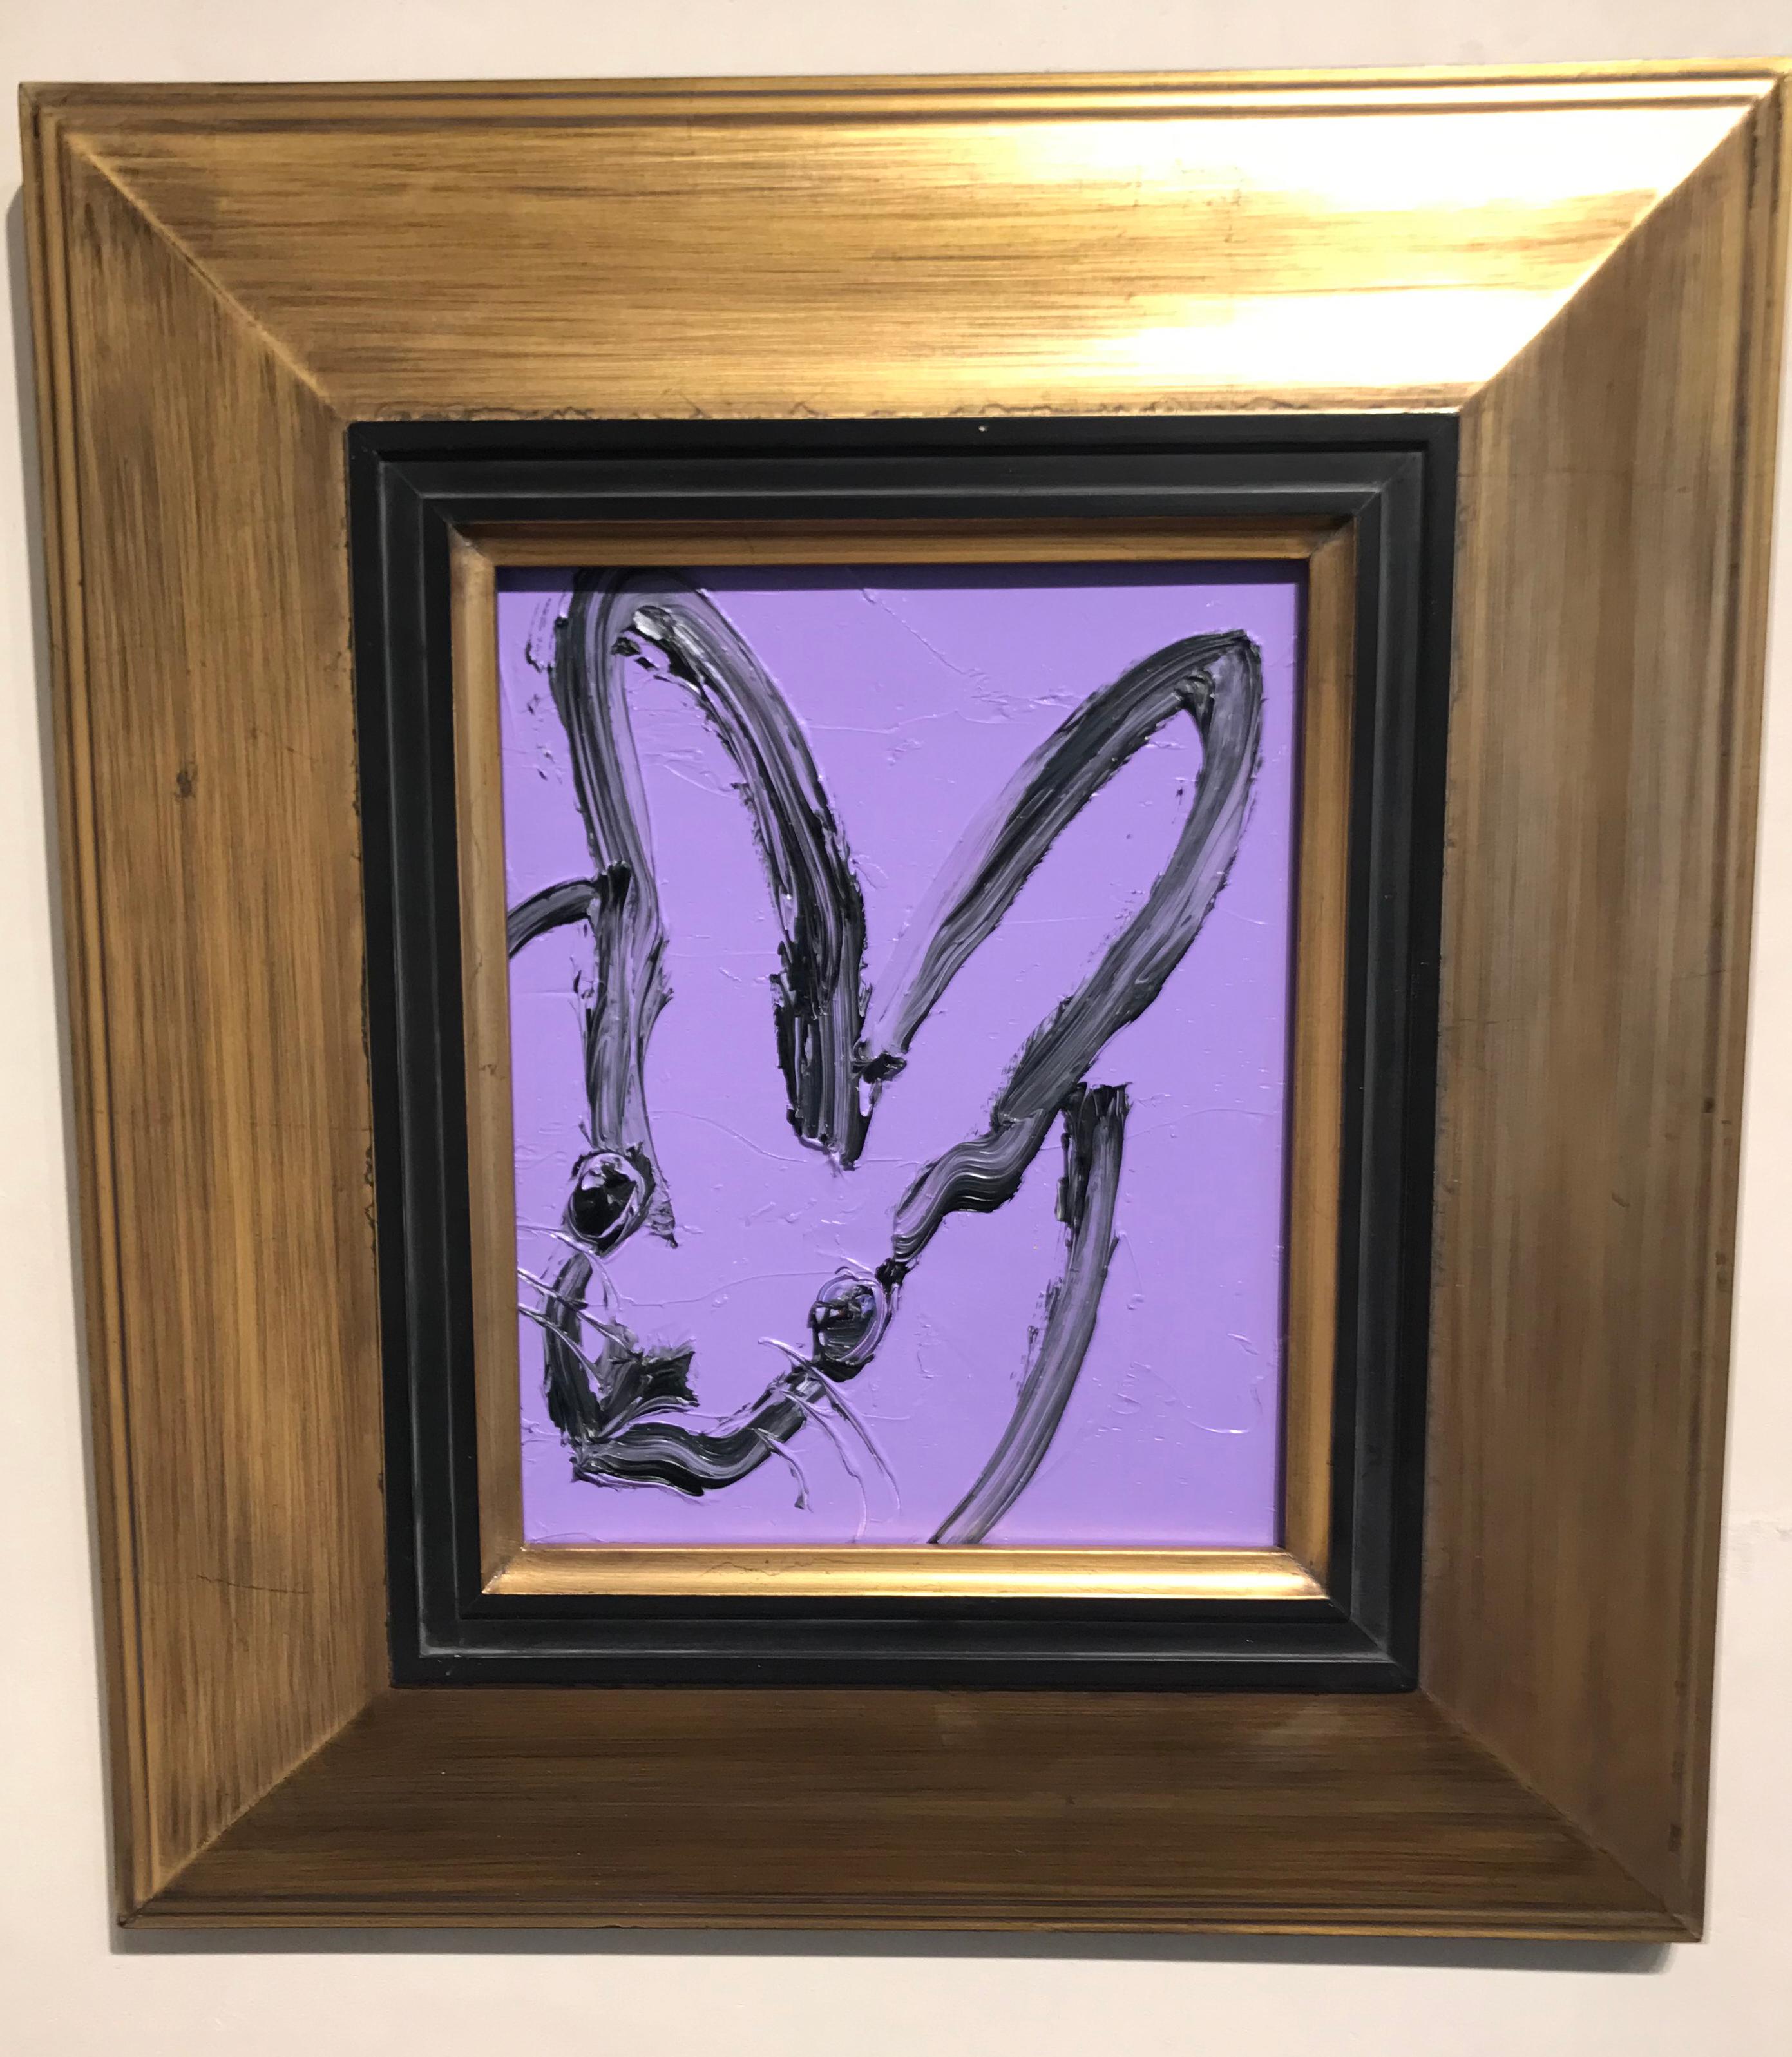 Untitled Lavender Bunny in oil paint with vintage frame by Hunt Slonem 1